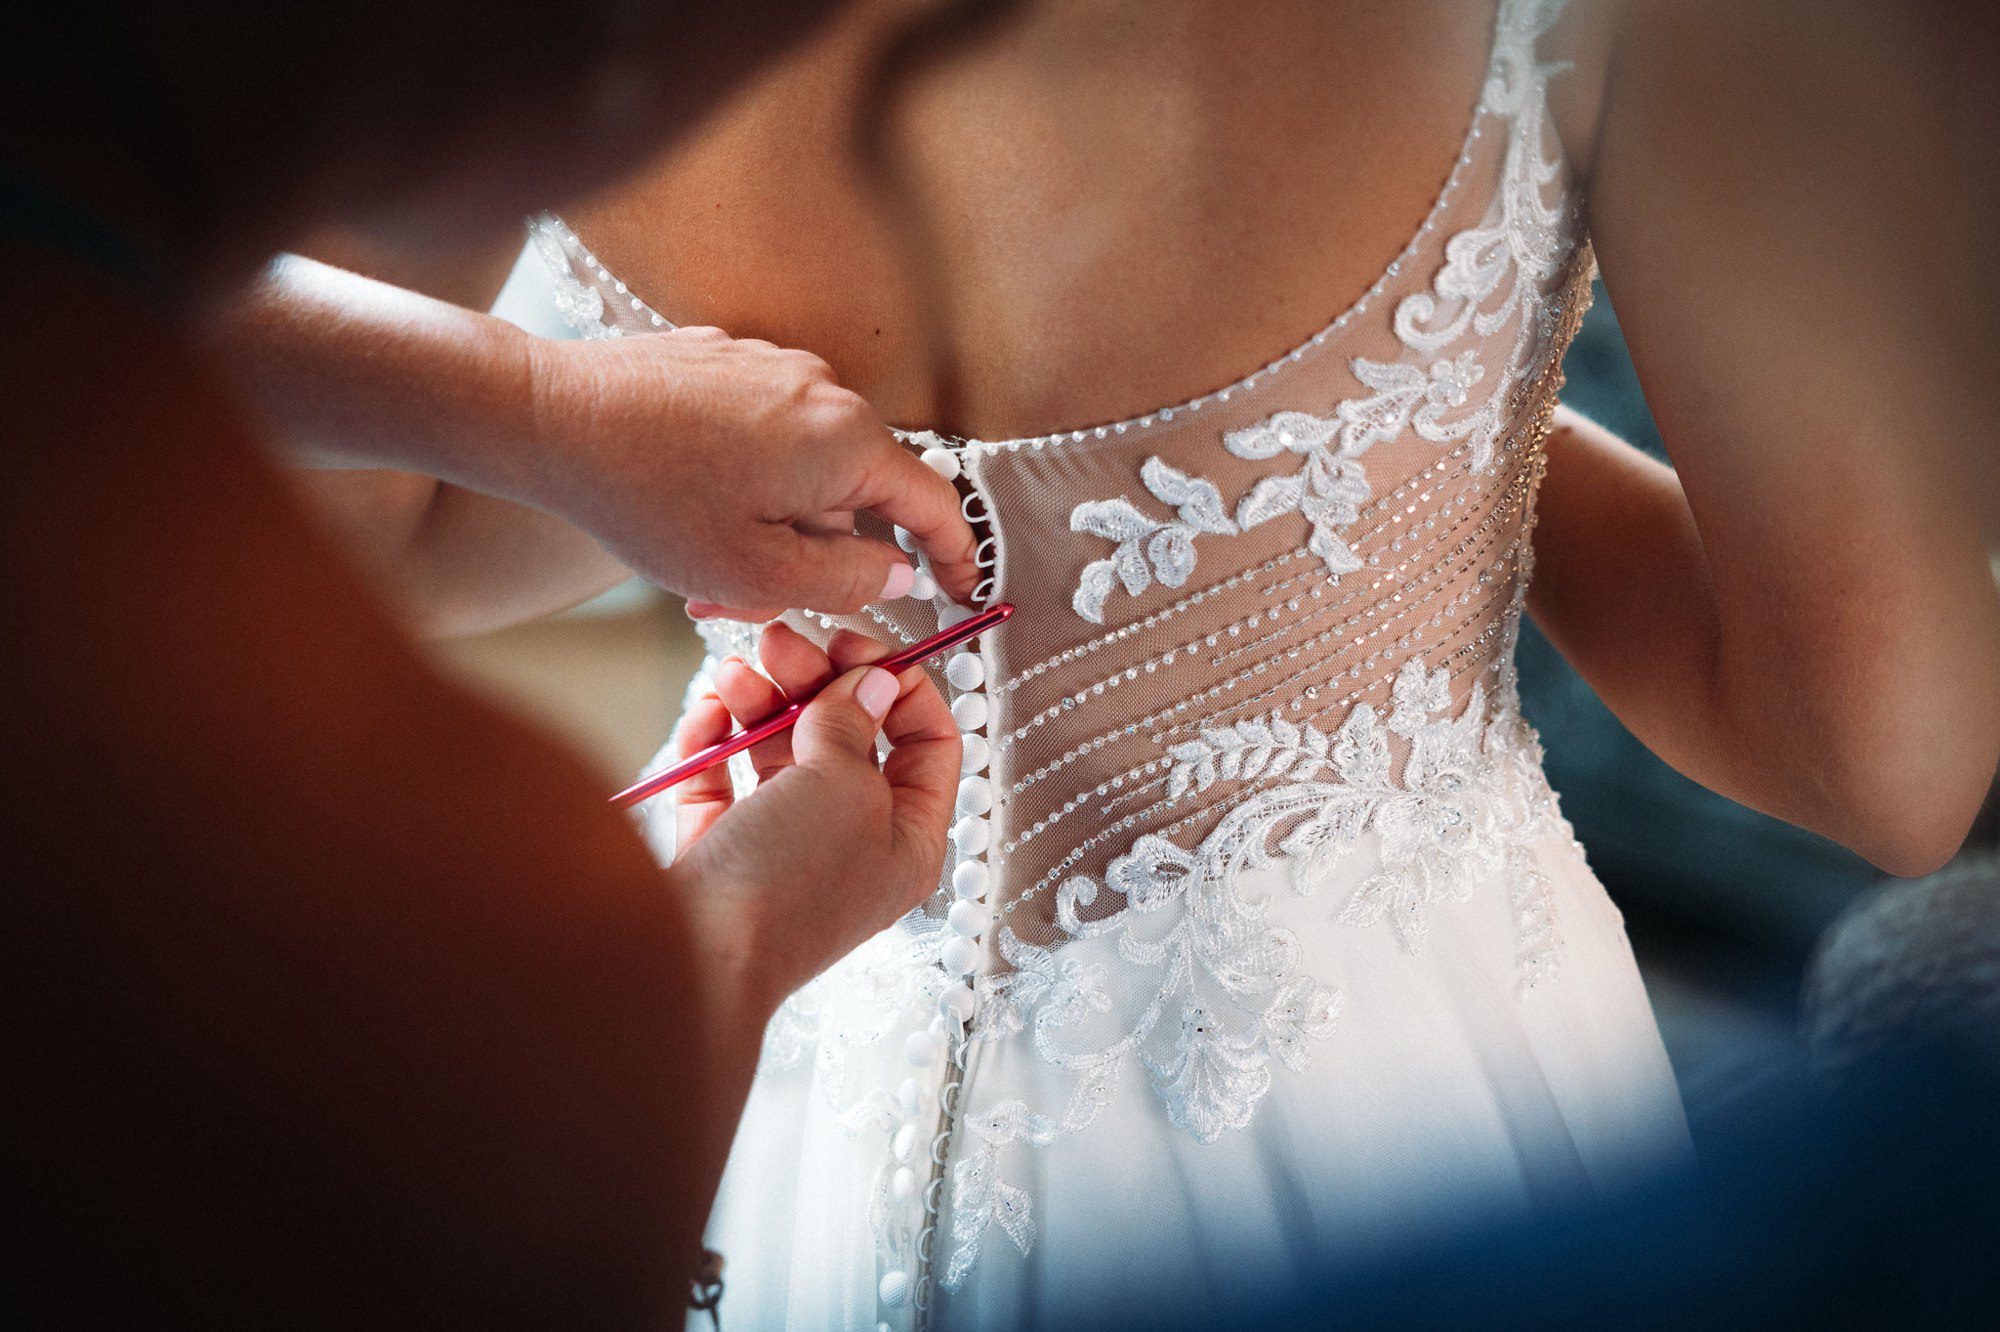 woman buttoning up wedding dress